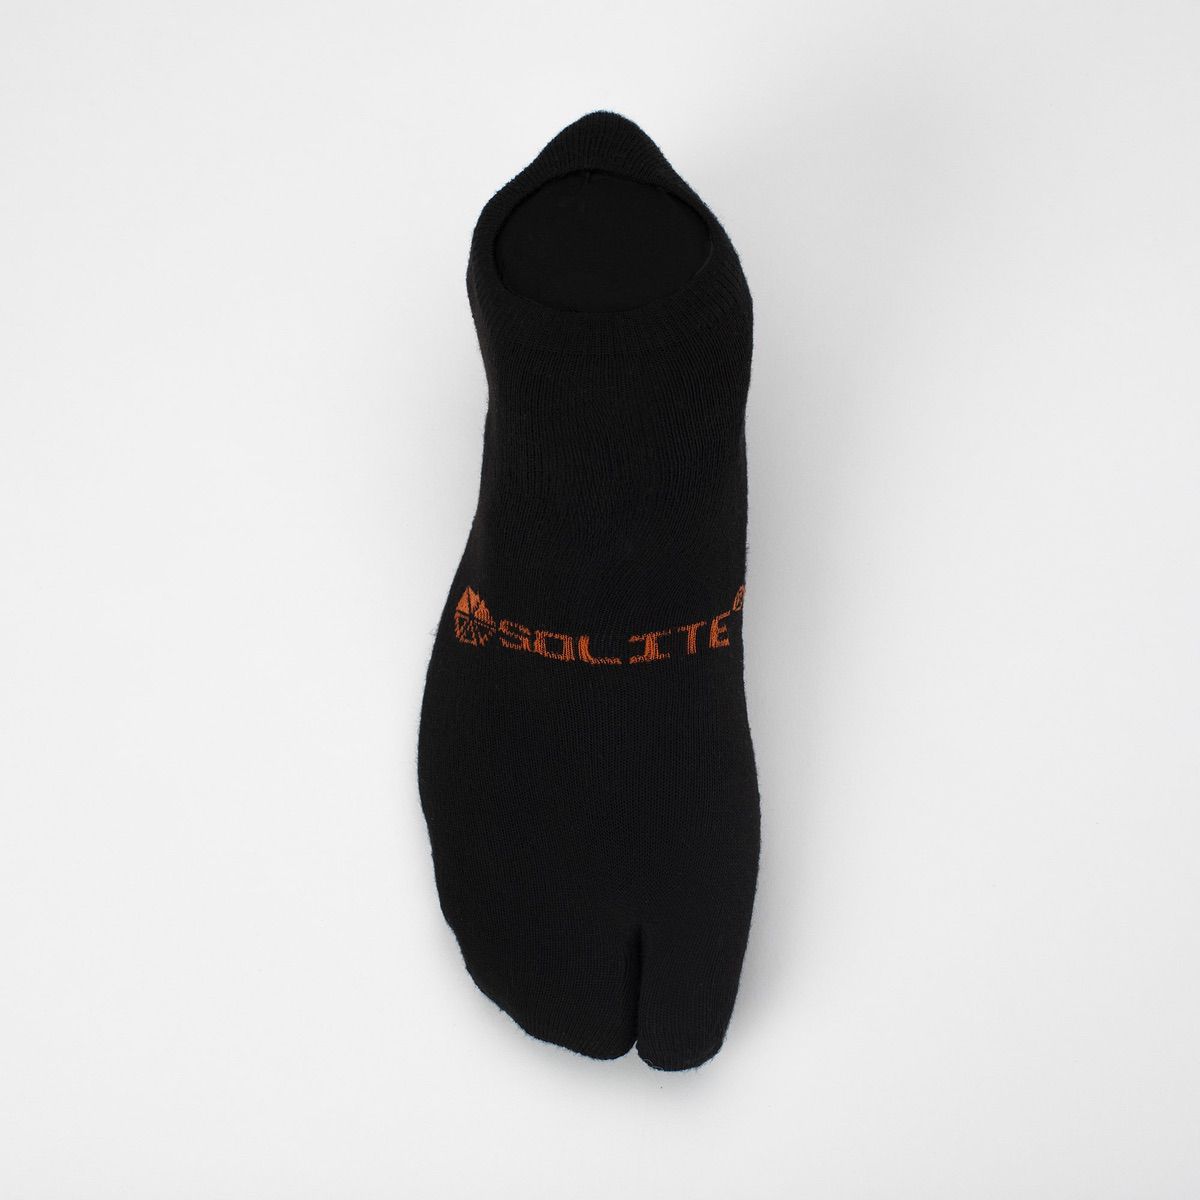 
                  
                    Booties 5mm SOLITE Custom (Black/Grey) - Includes Heat Booster Socks
                  
                